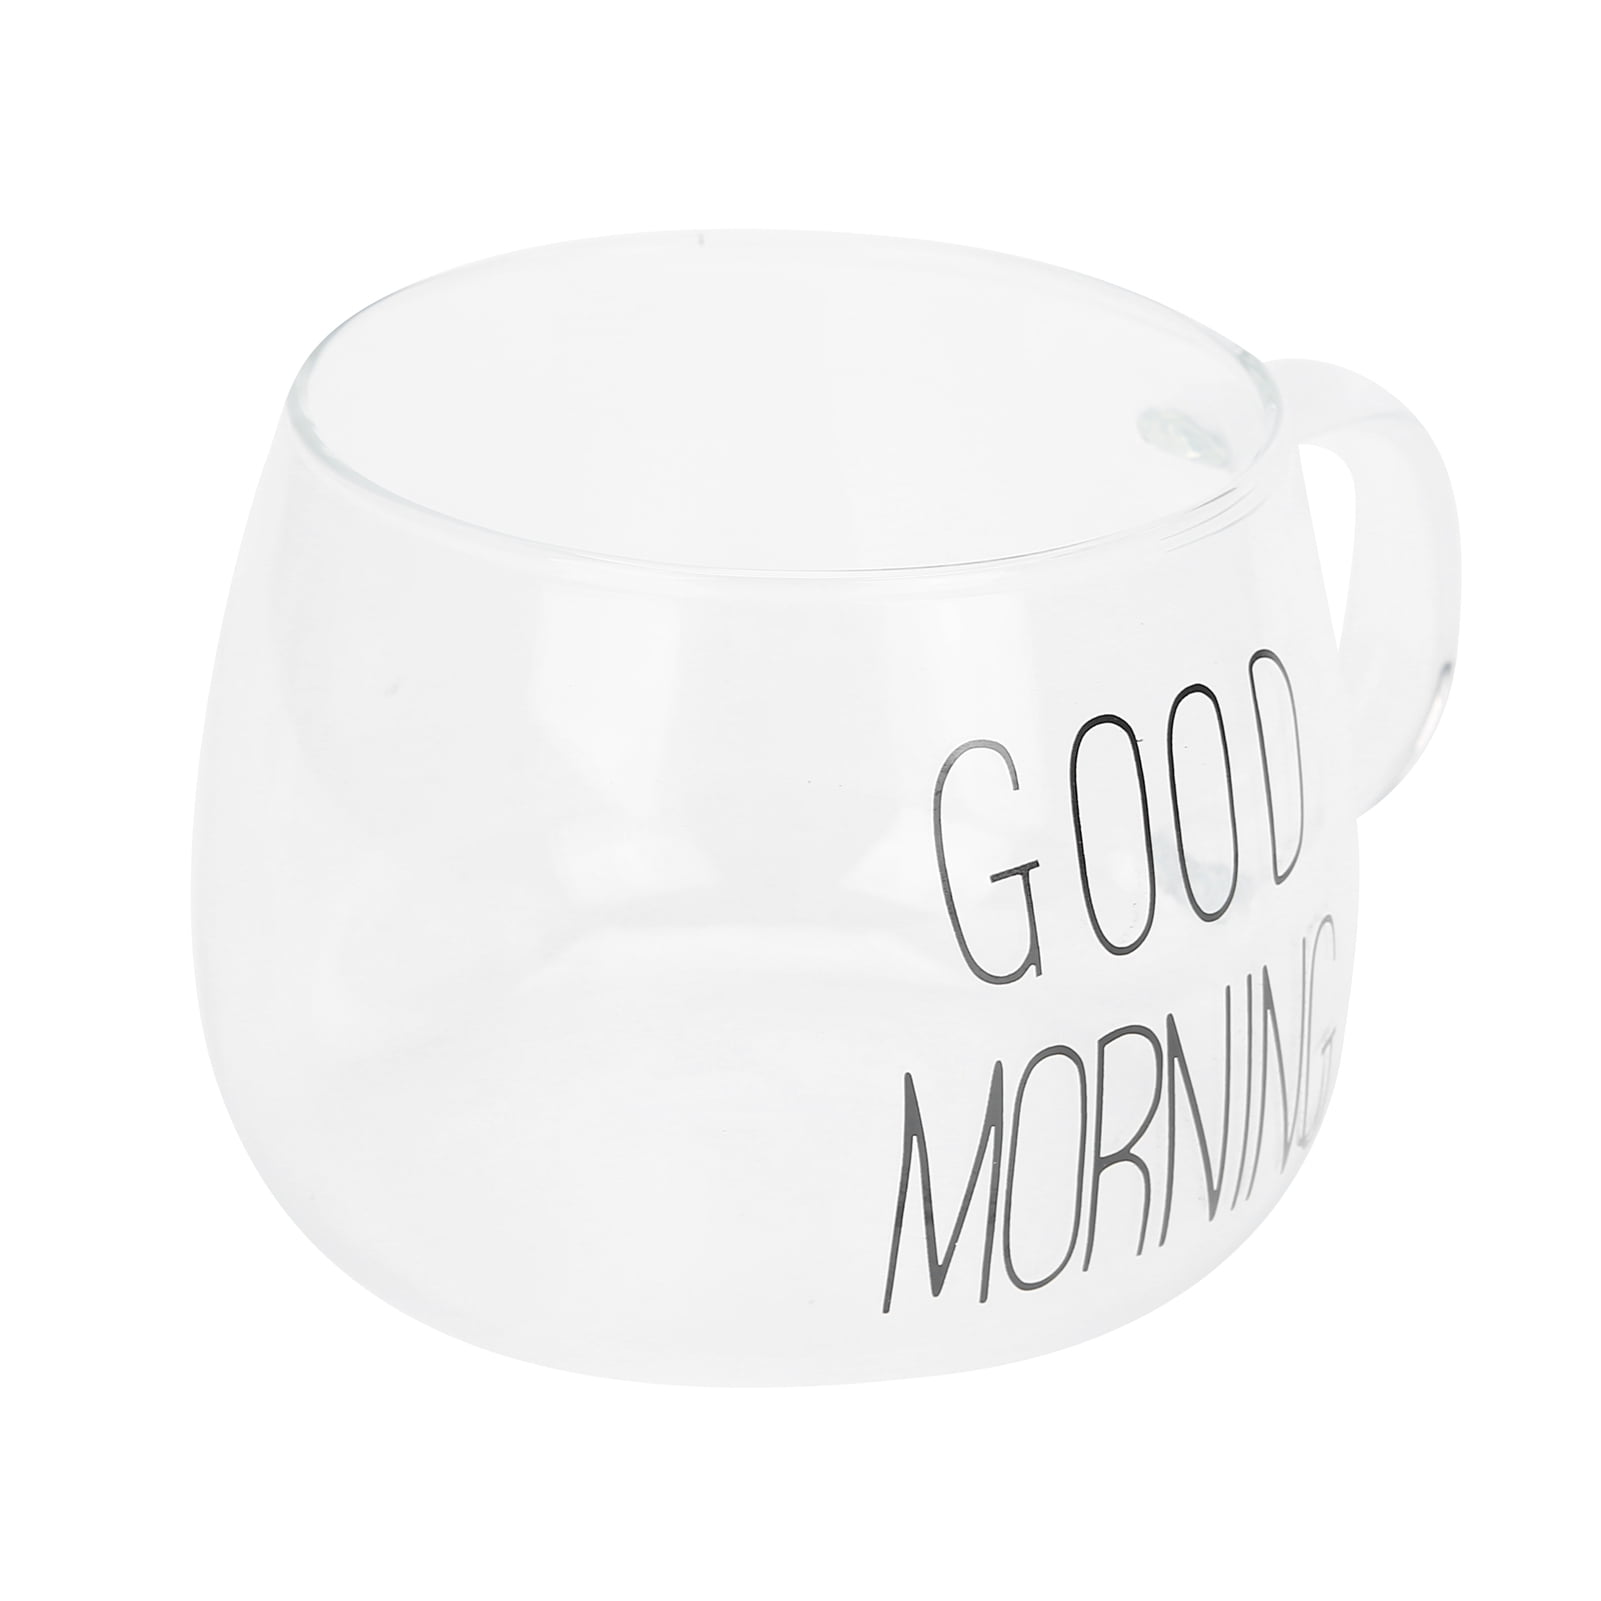 DM DESIGN·MASTER [6 PACK, 12 OZ] - Premium Glass Coffee Mugs with Handle.  Transparent Tea Glasses f…See more DM DESIGN·MASTER [6 PACK, 12 OZ] 